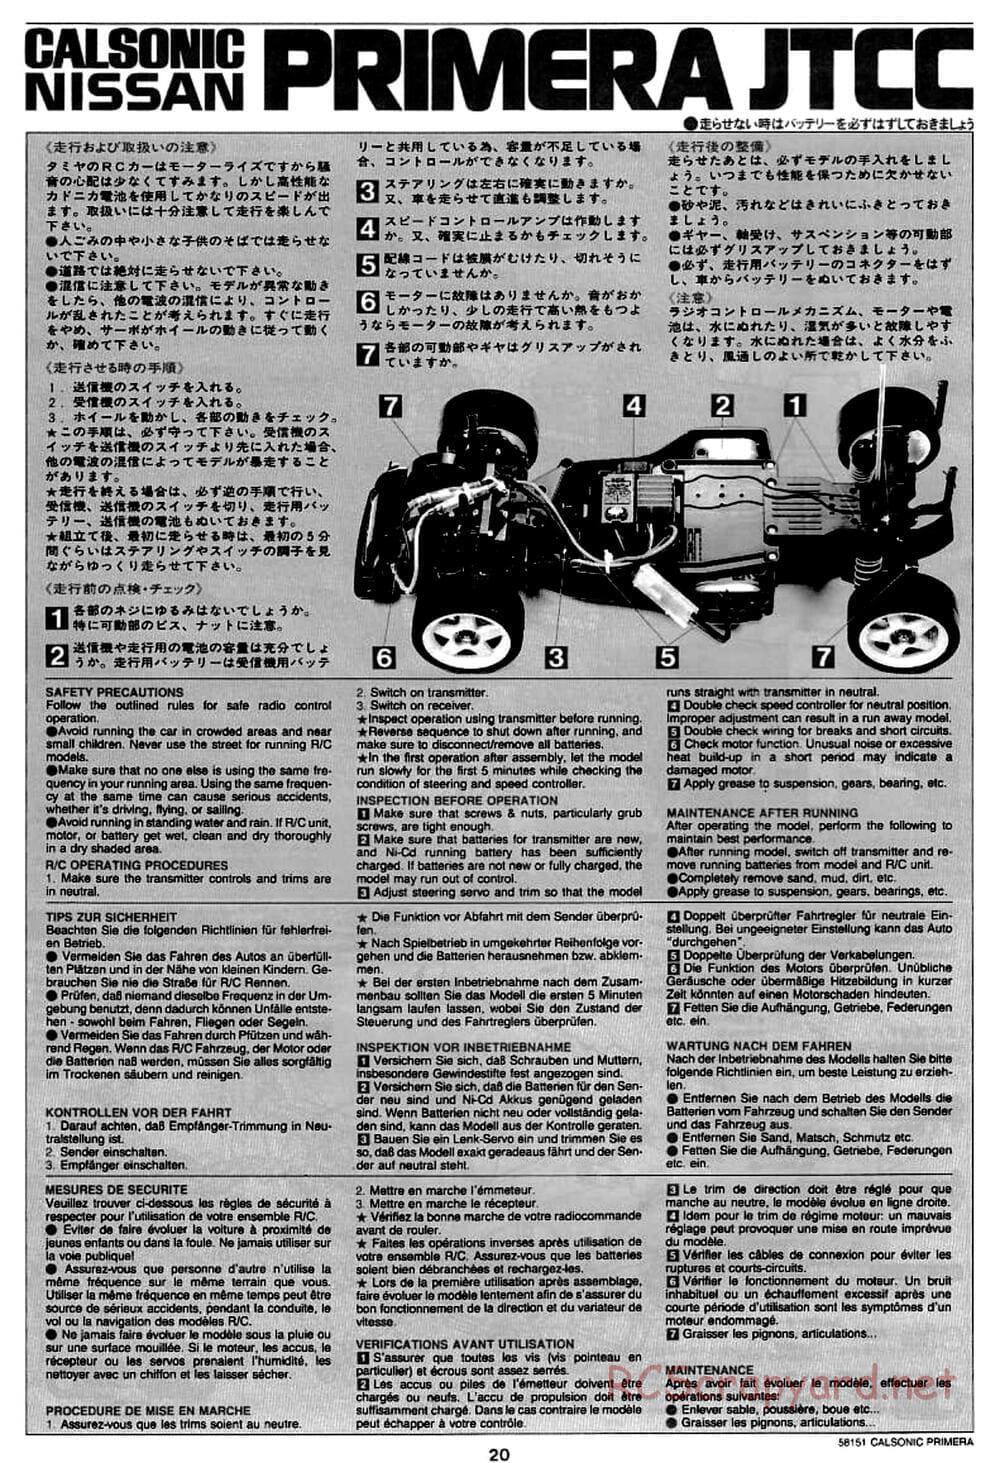 Tamiya - Calsonic Nissan Primera JTCC - FF-01 Chassis - Manual - Page 20